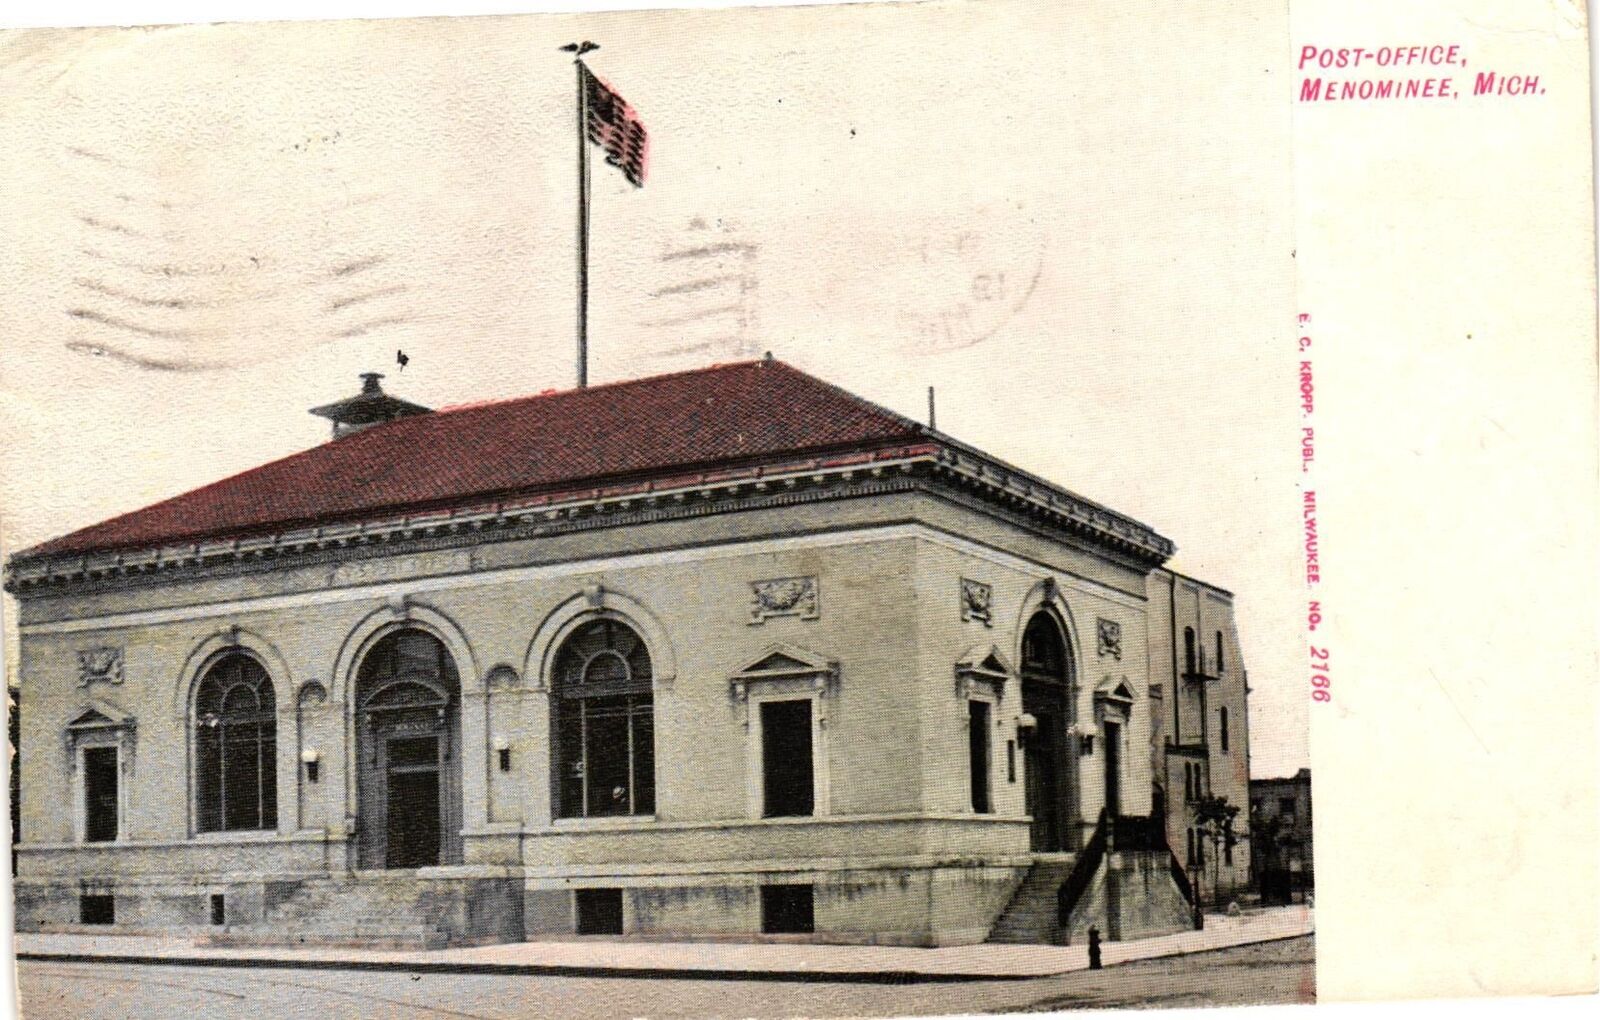 Vintage Postcard- Post-Office, Menominee, MI. Early 1900s